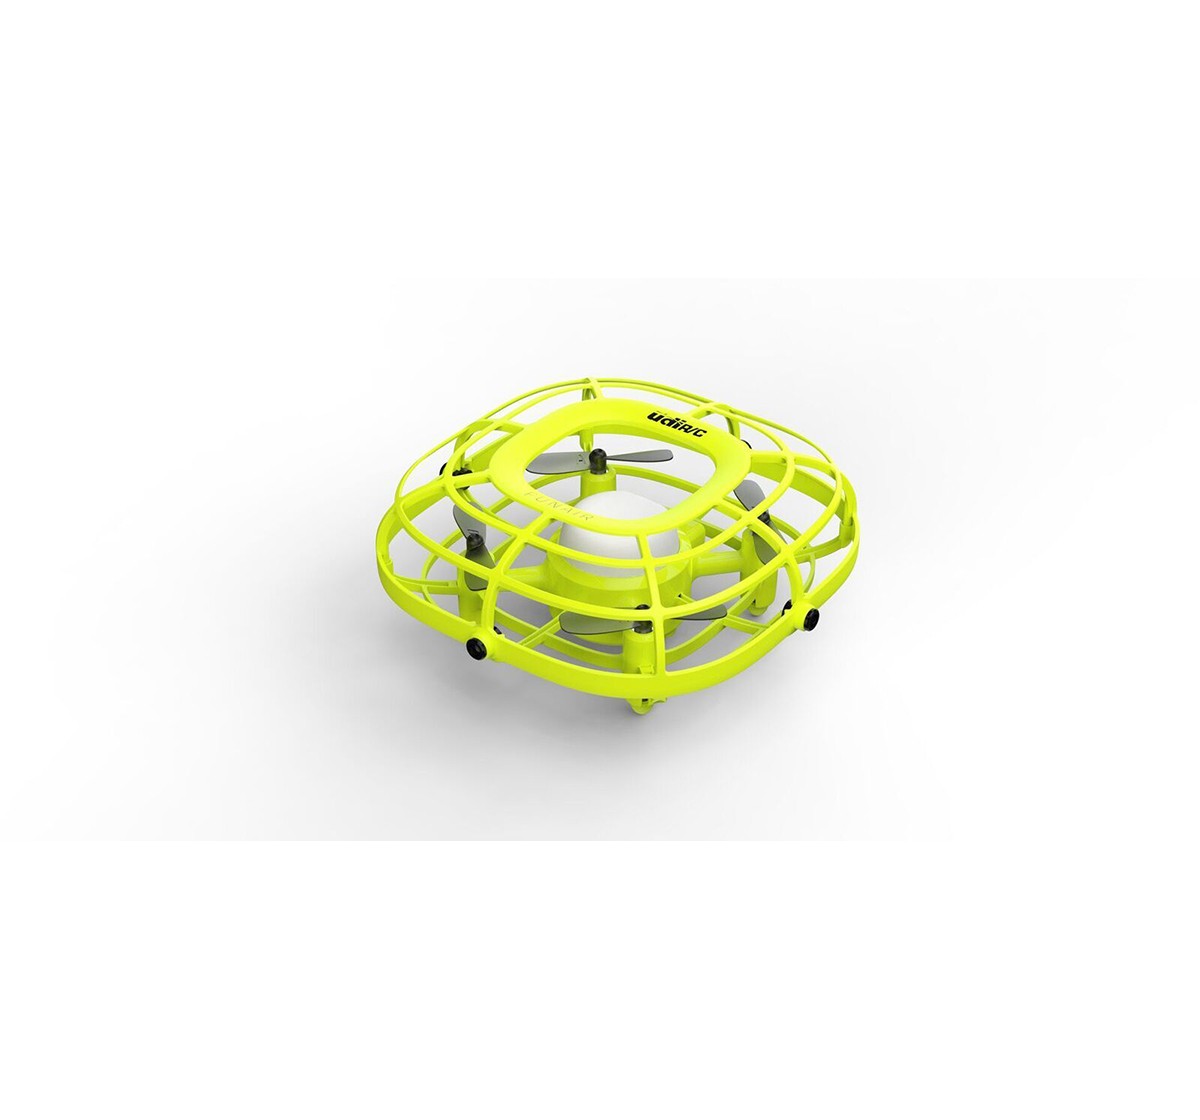 Sirius Toys Udirc U58 Funair Alien Ship Drone Remote Control Toys for Kids age 8Y+ 